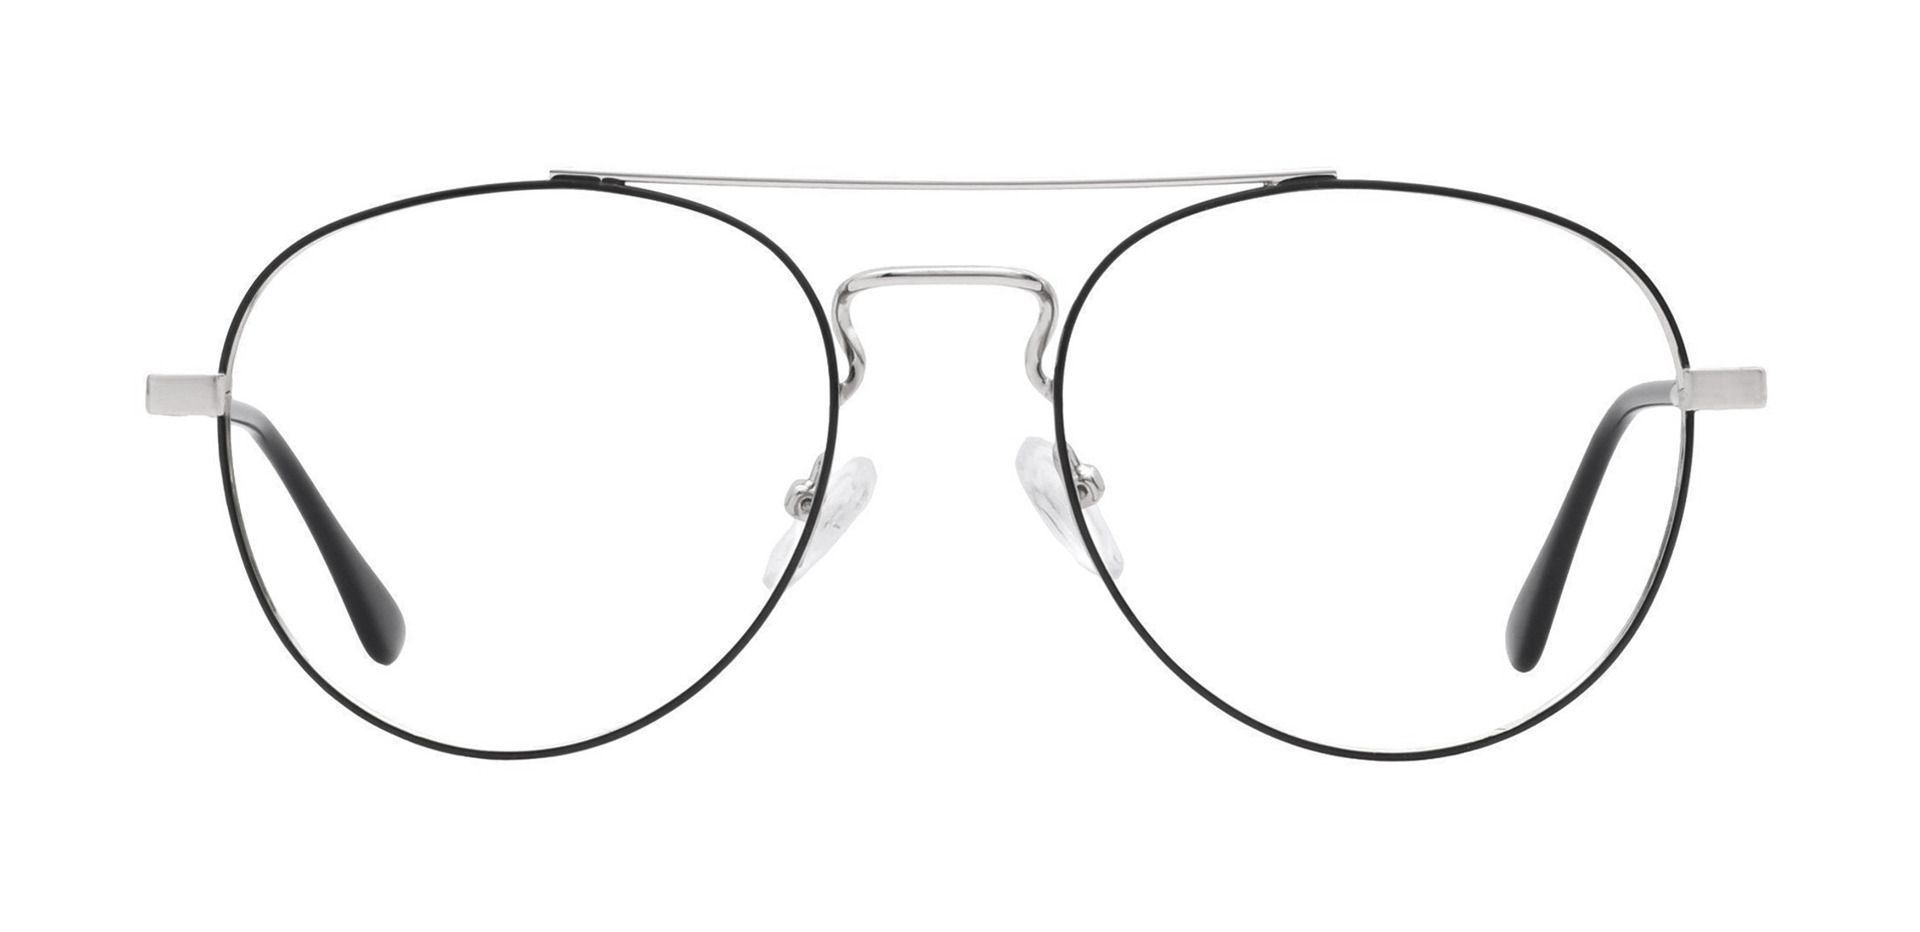 Trapp Aviator Eyeglasses Frame - Gray